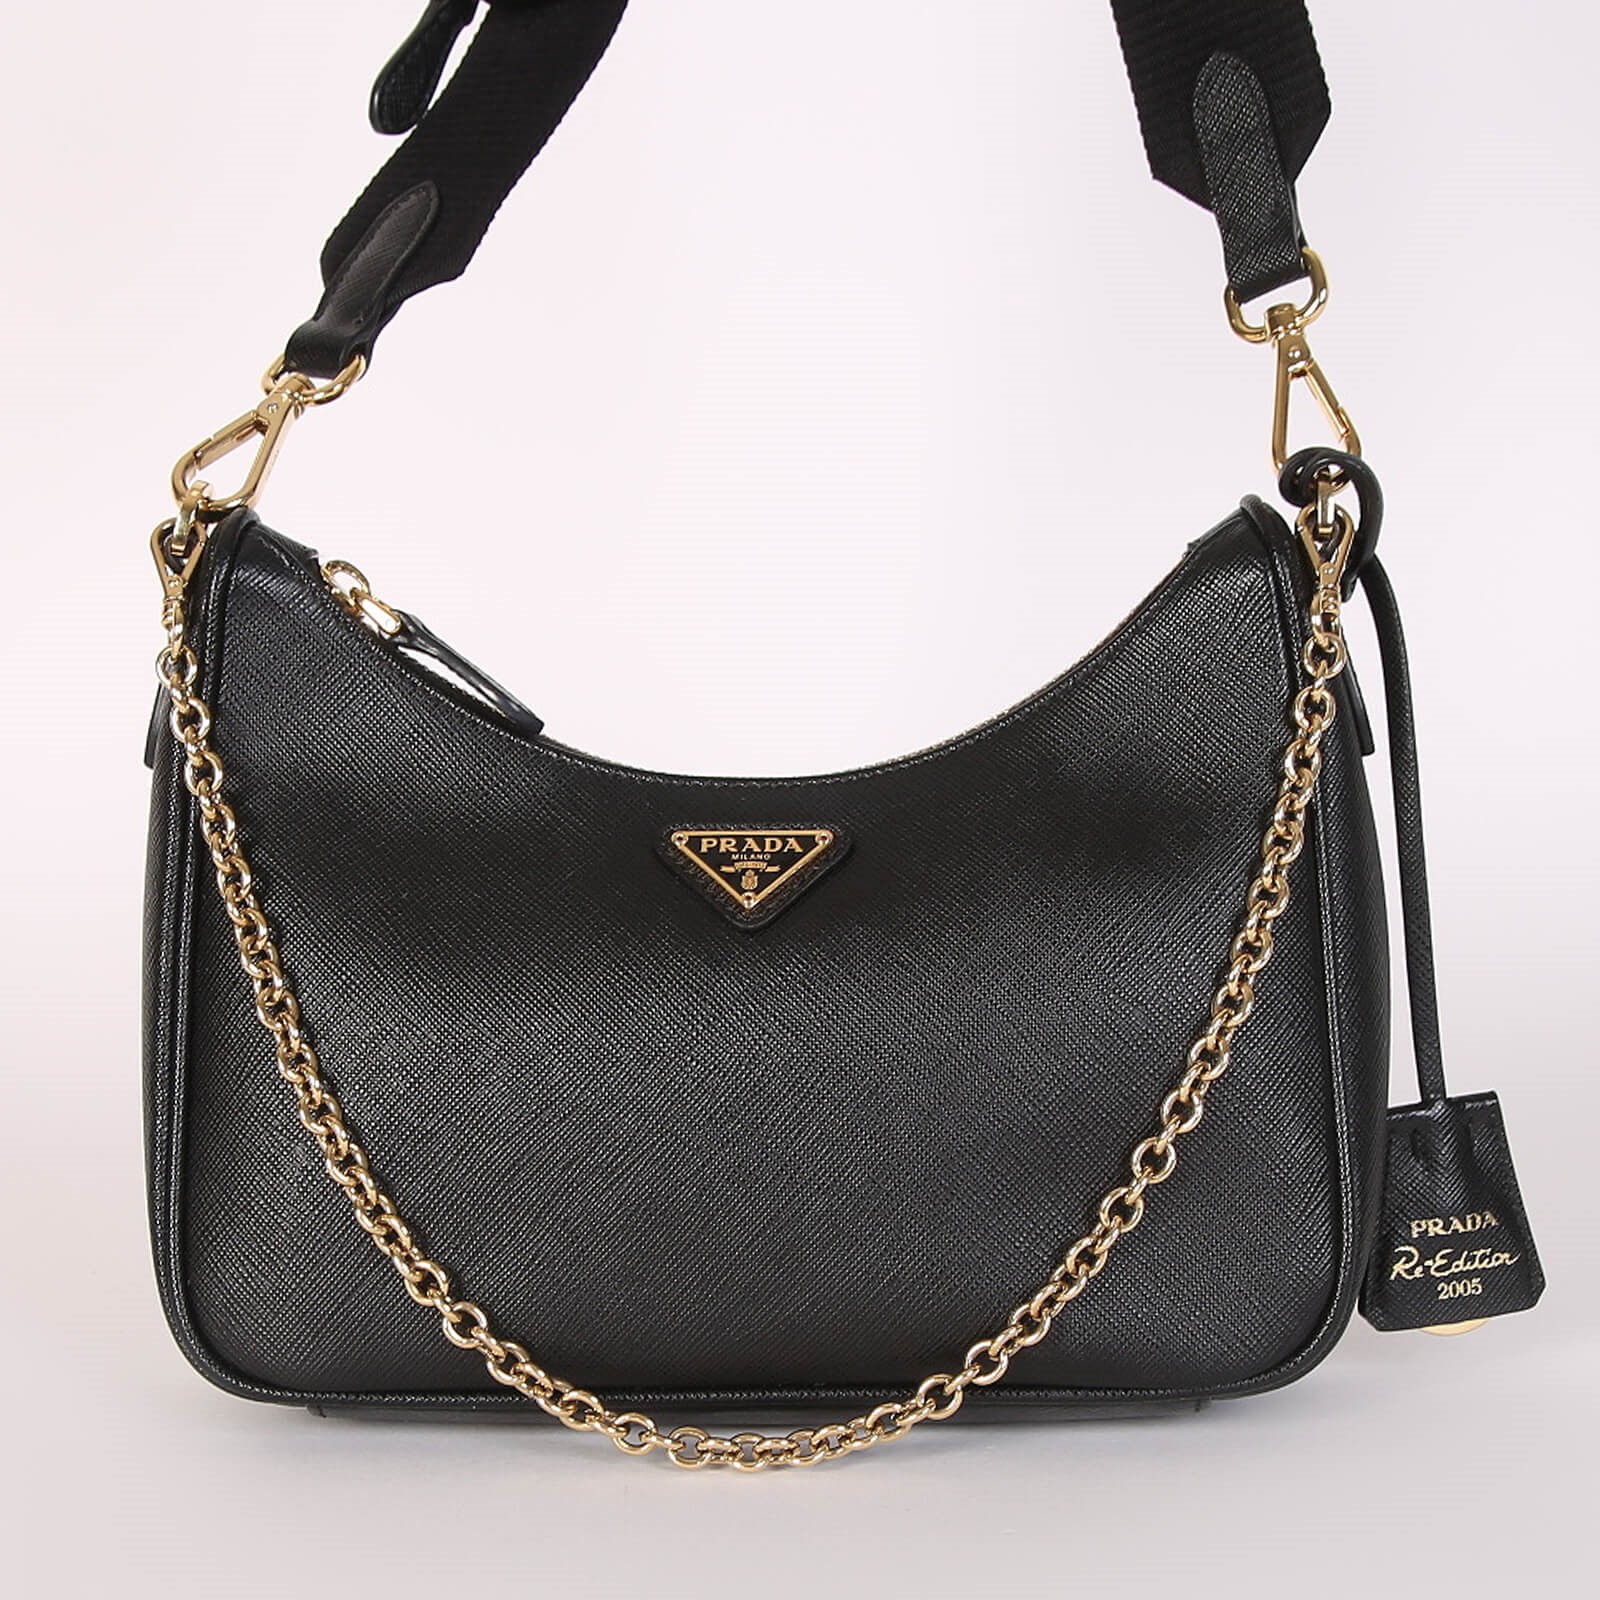 Prada Leather Cross Body Bag Black Gold Re-Edition 2005 Saffiano